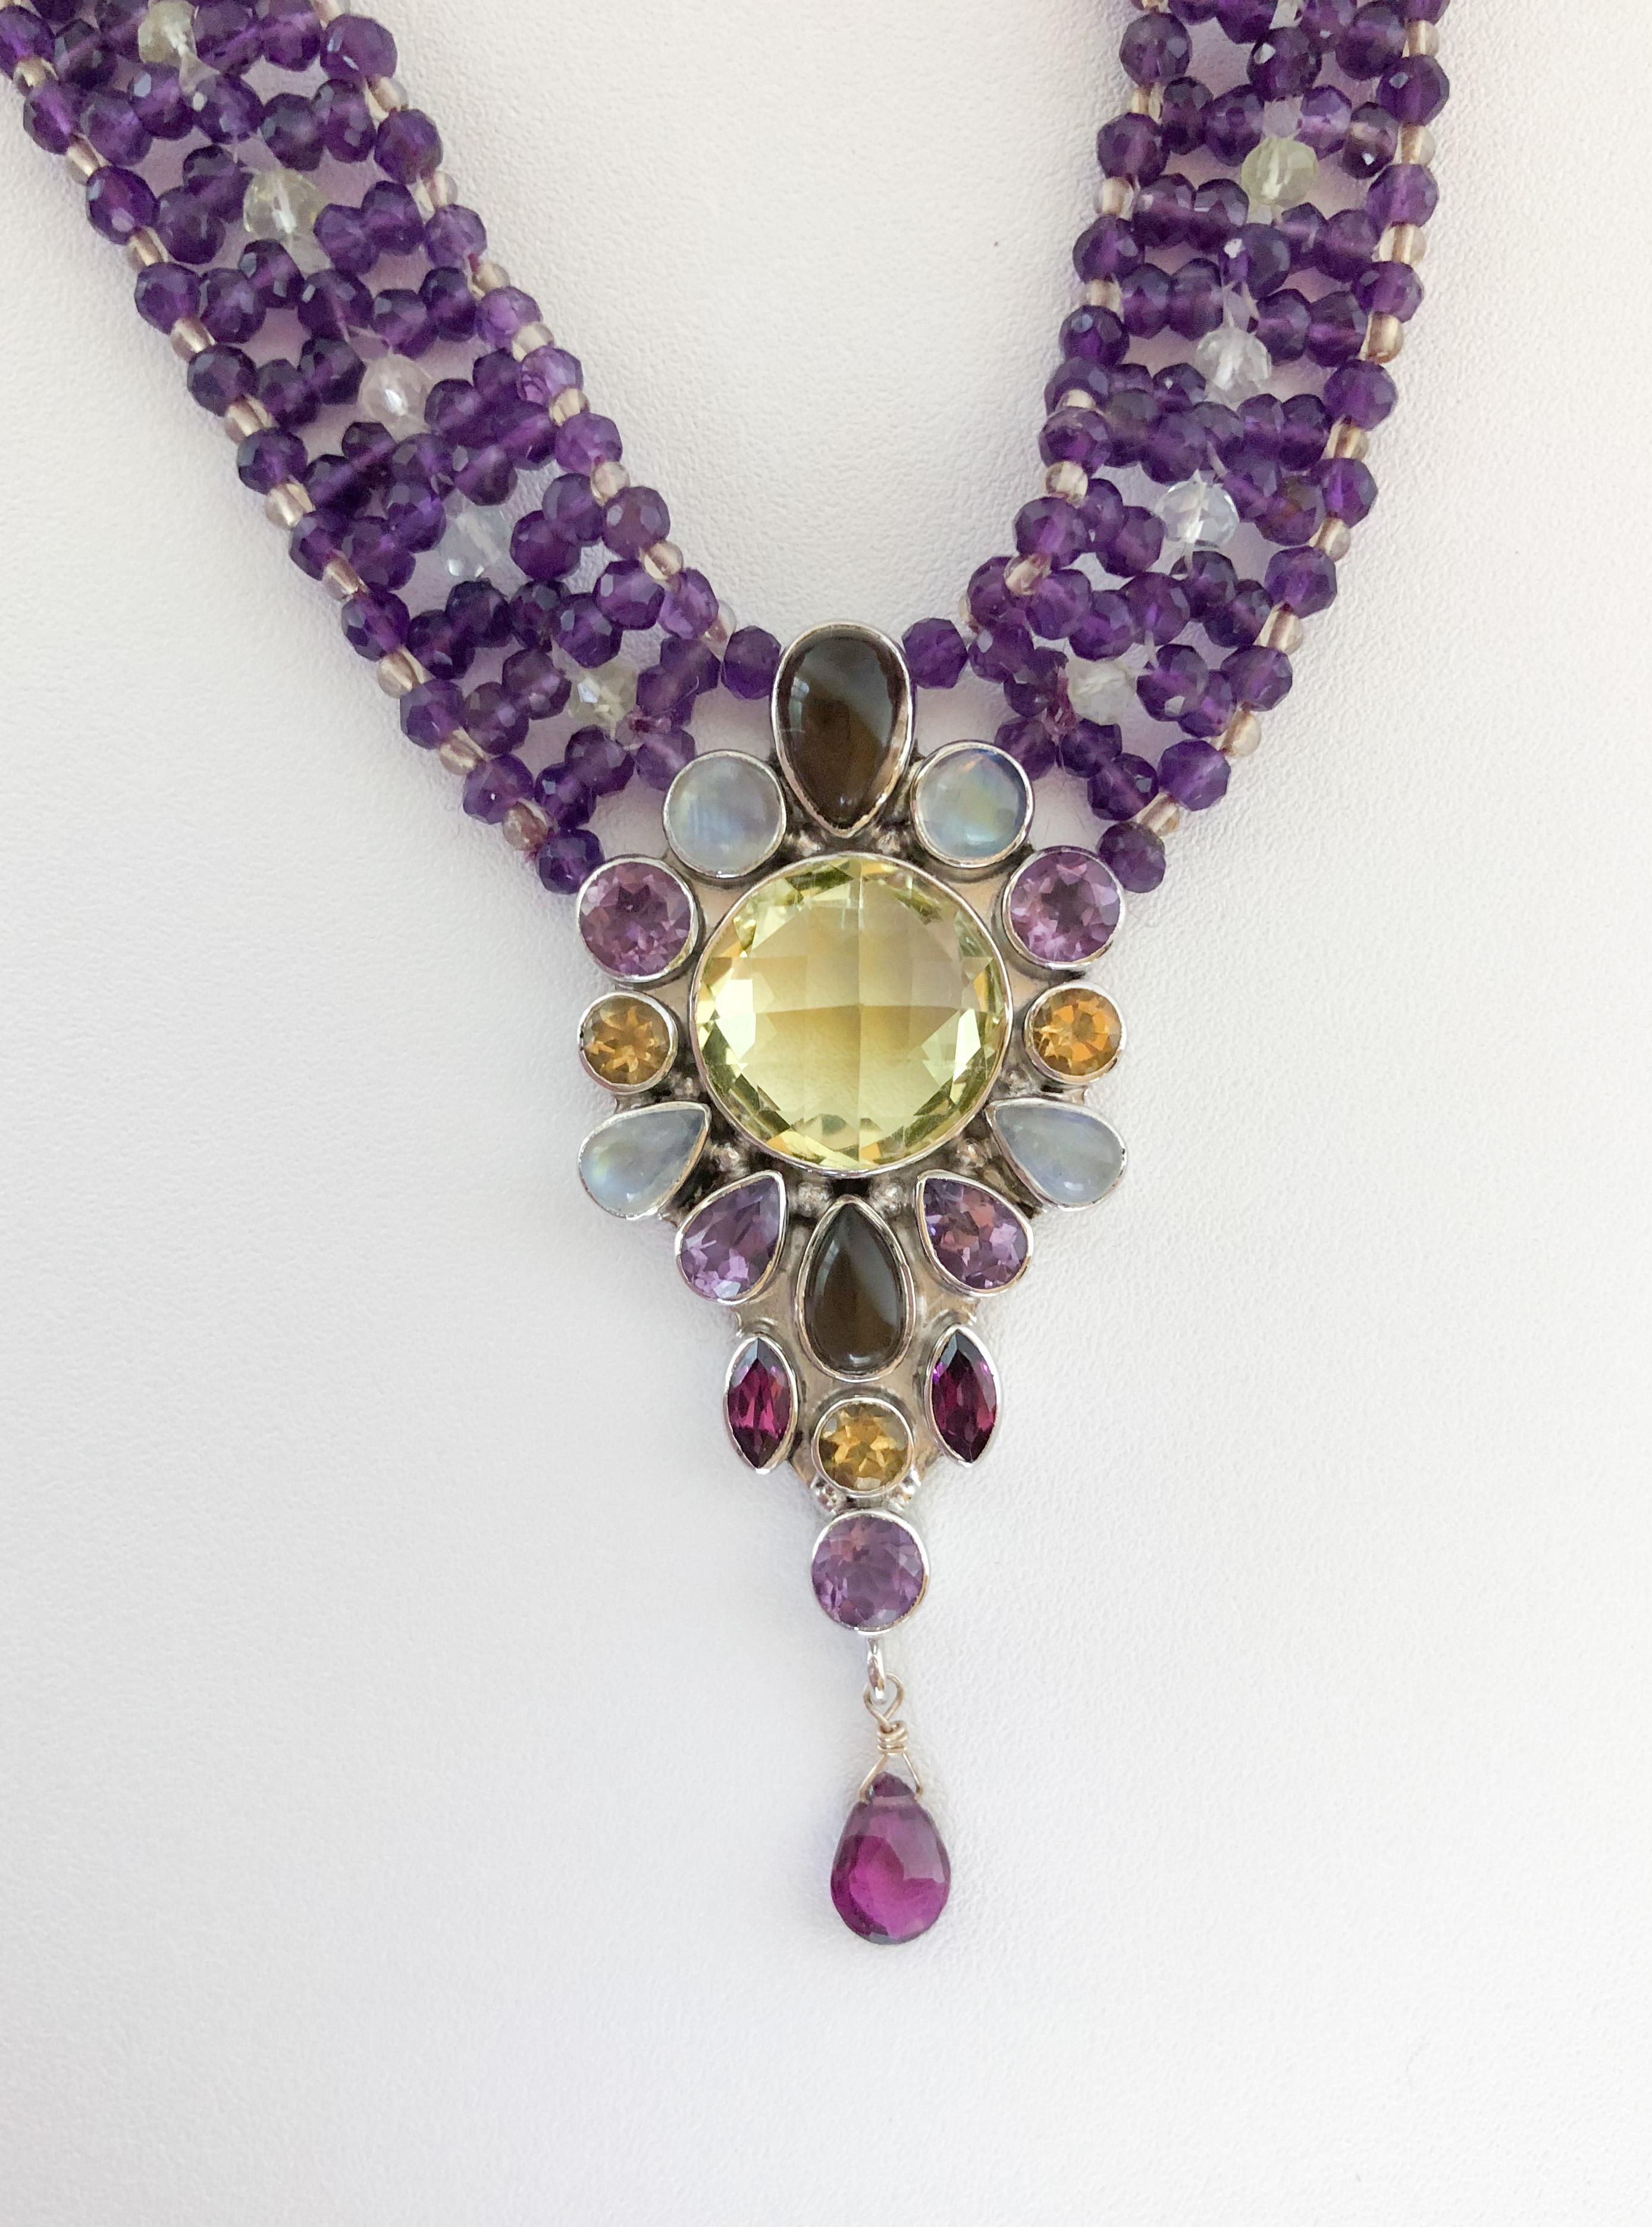 Artisan Marina J. Stunning Amethyst Woven Necklace with Garnet, Citrine, Topaz and Opal